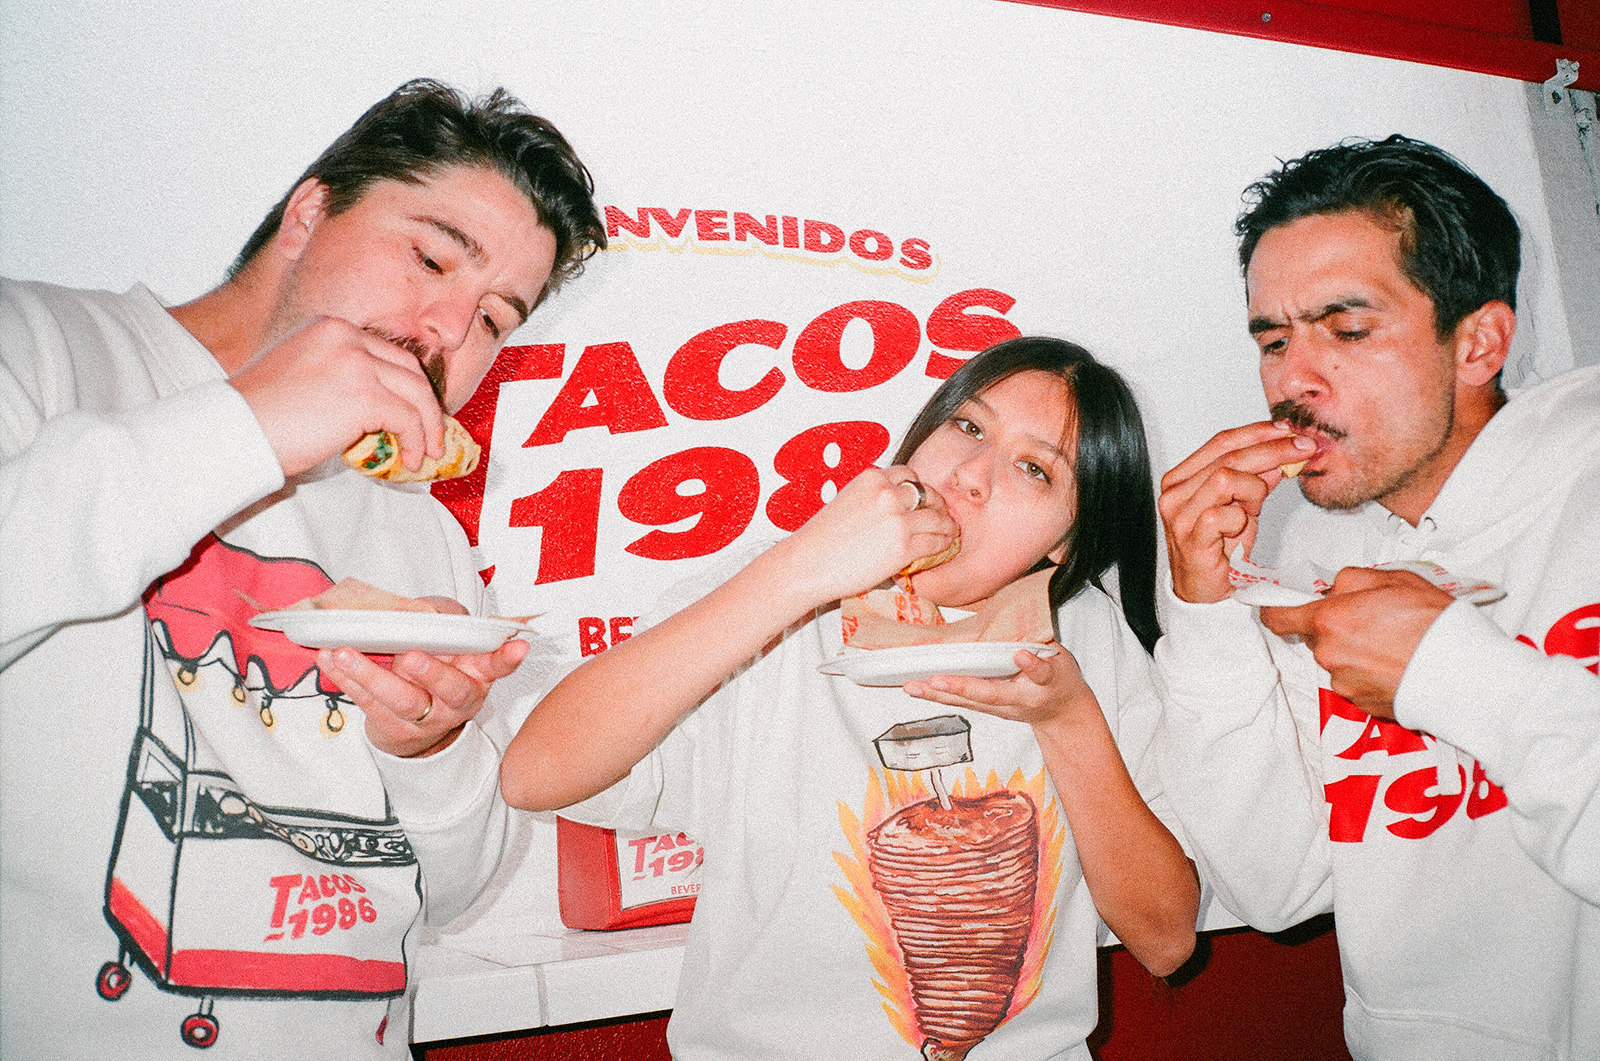 tacos-1986-x-hm-blank-staples-header